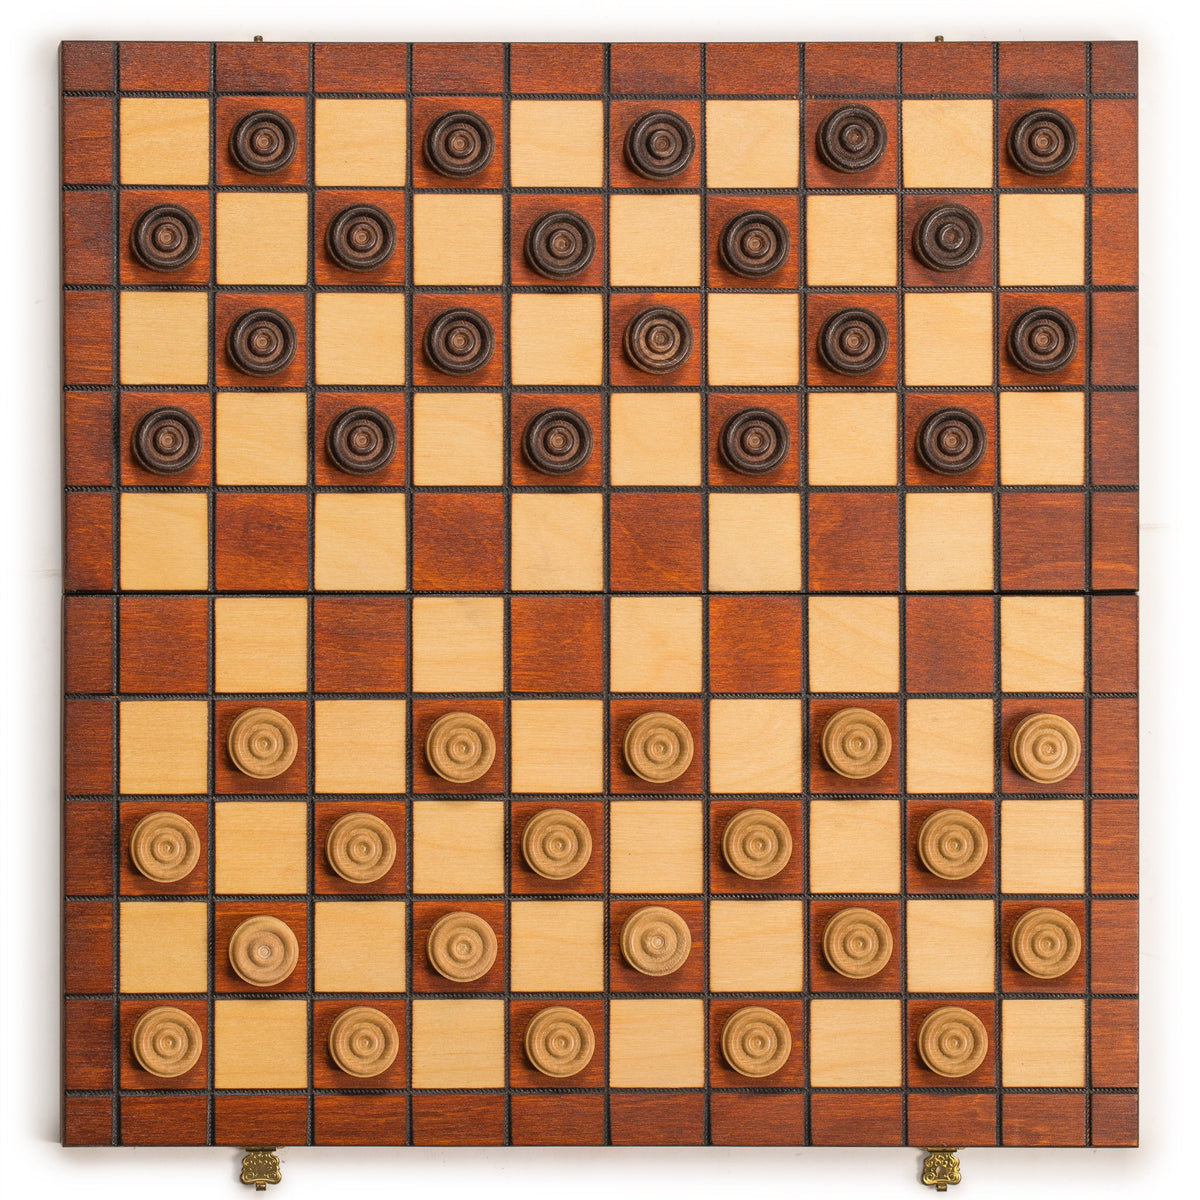 World Checkers Draughts 64-100